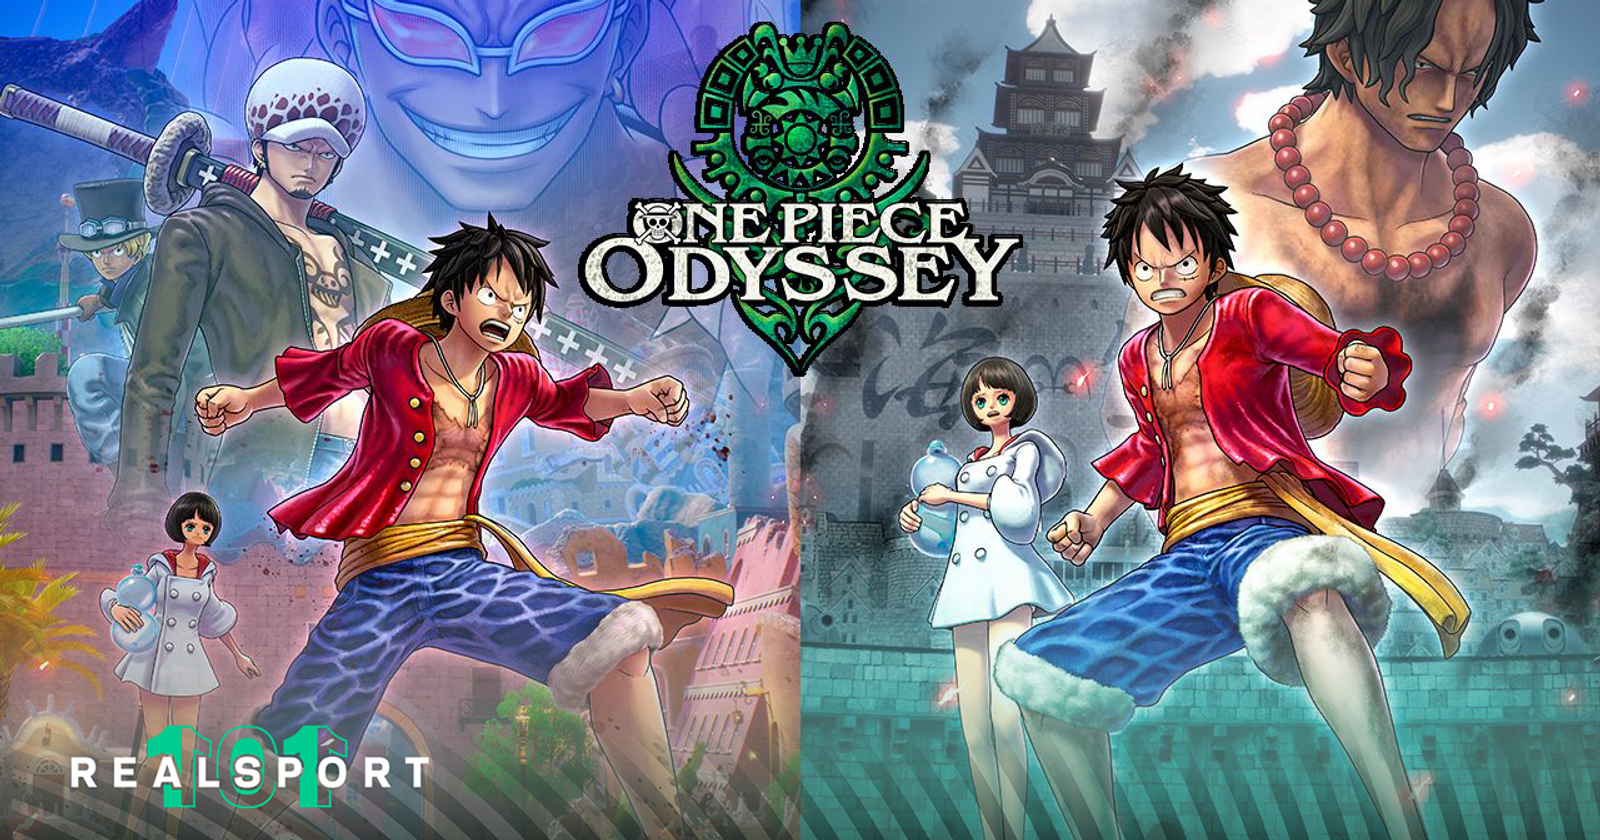  One Piece Odyssey - PlayStation 5 : Bandai Namco Games